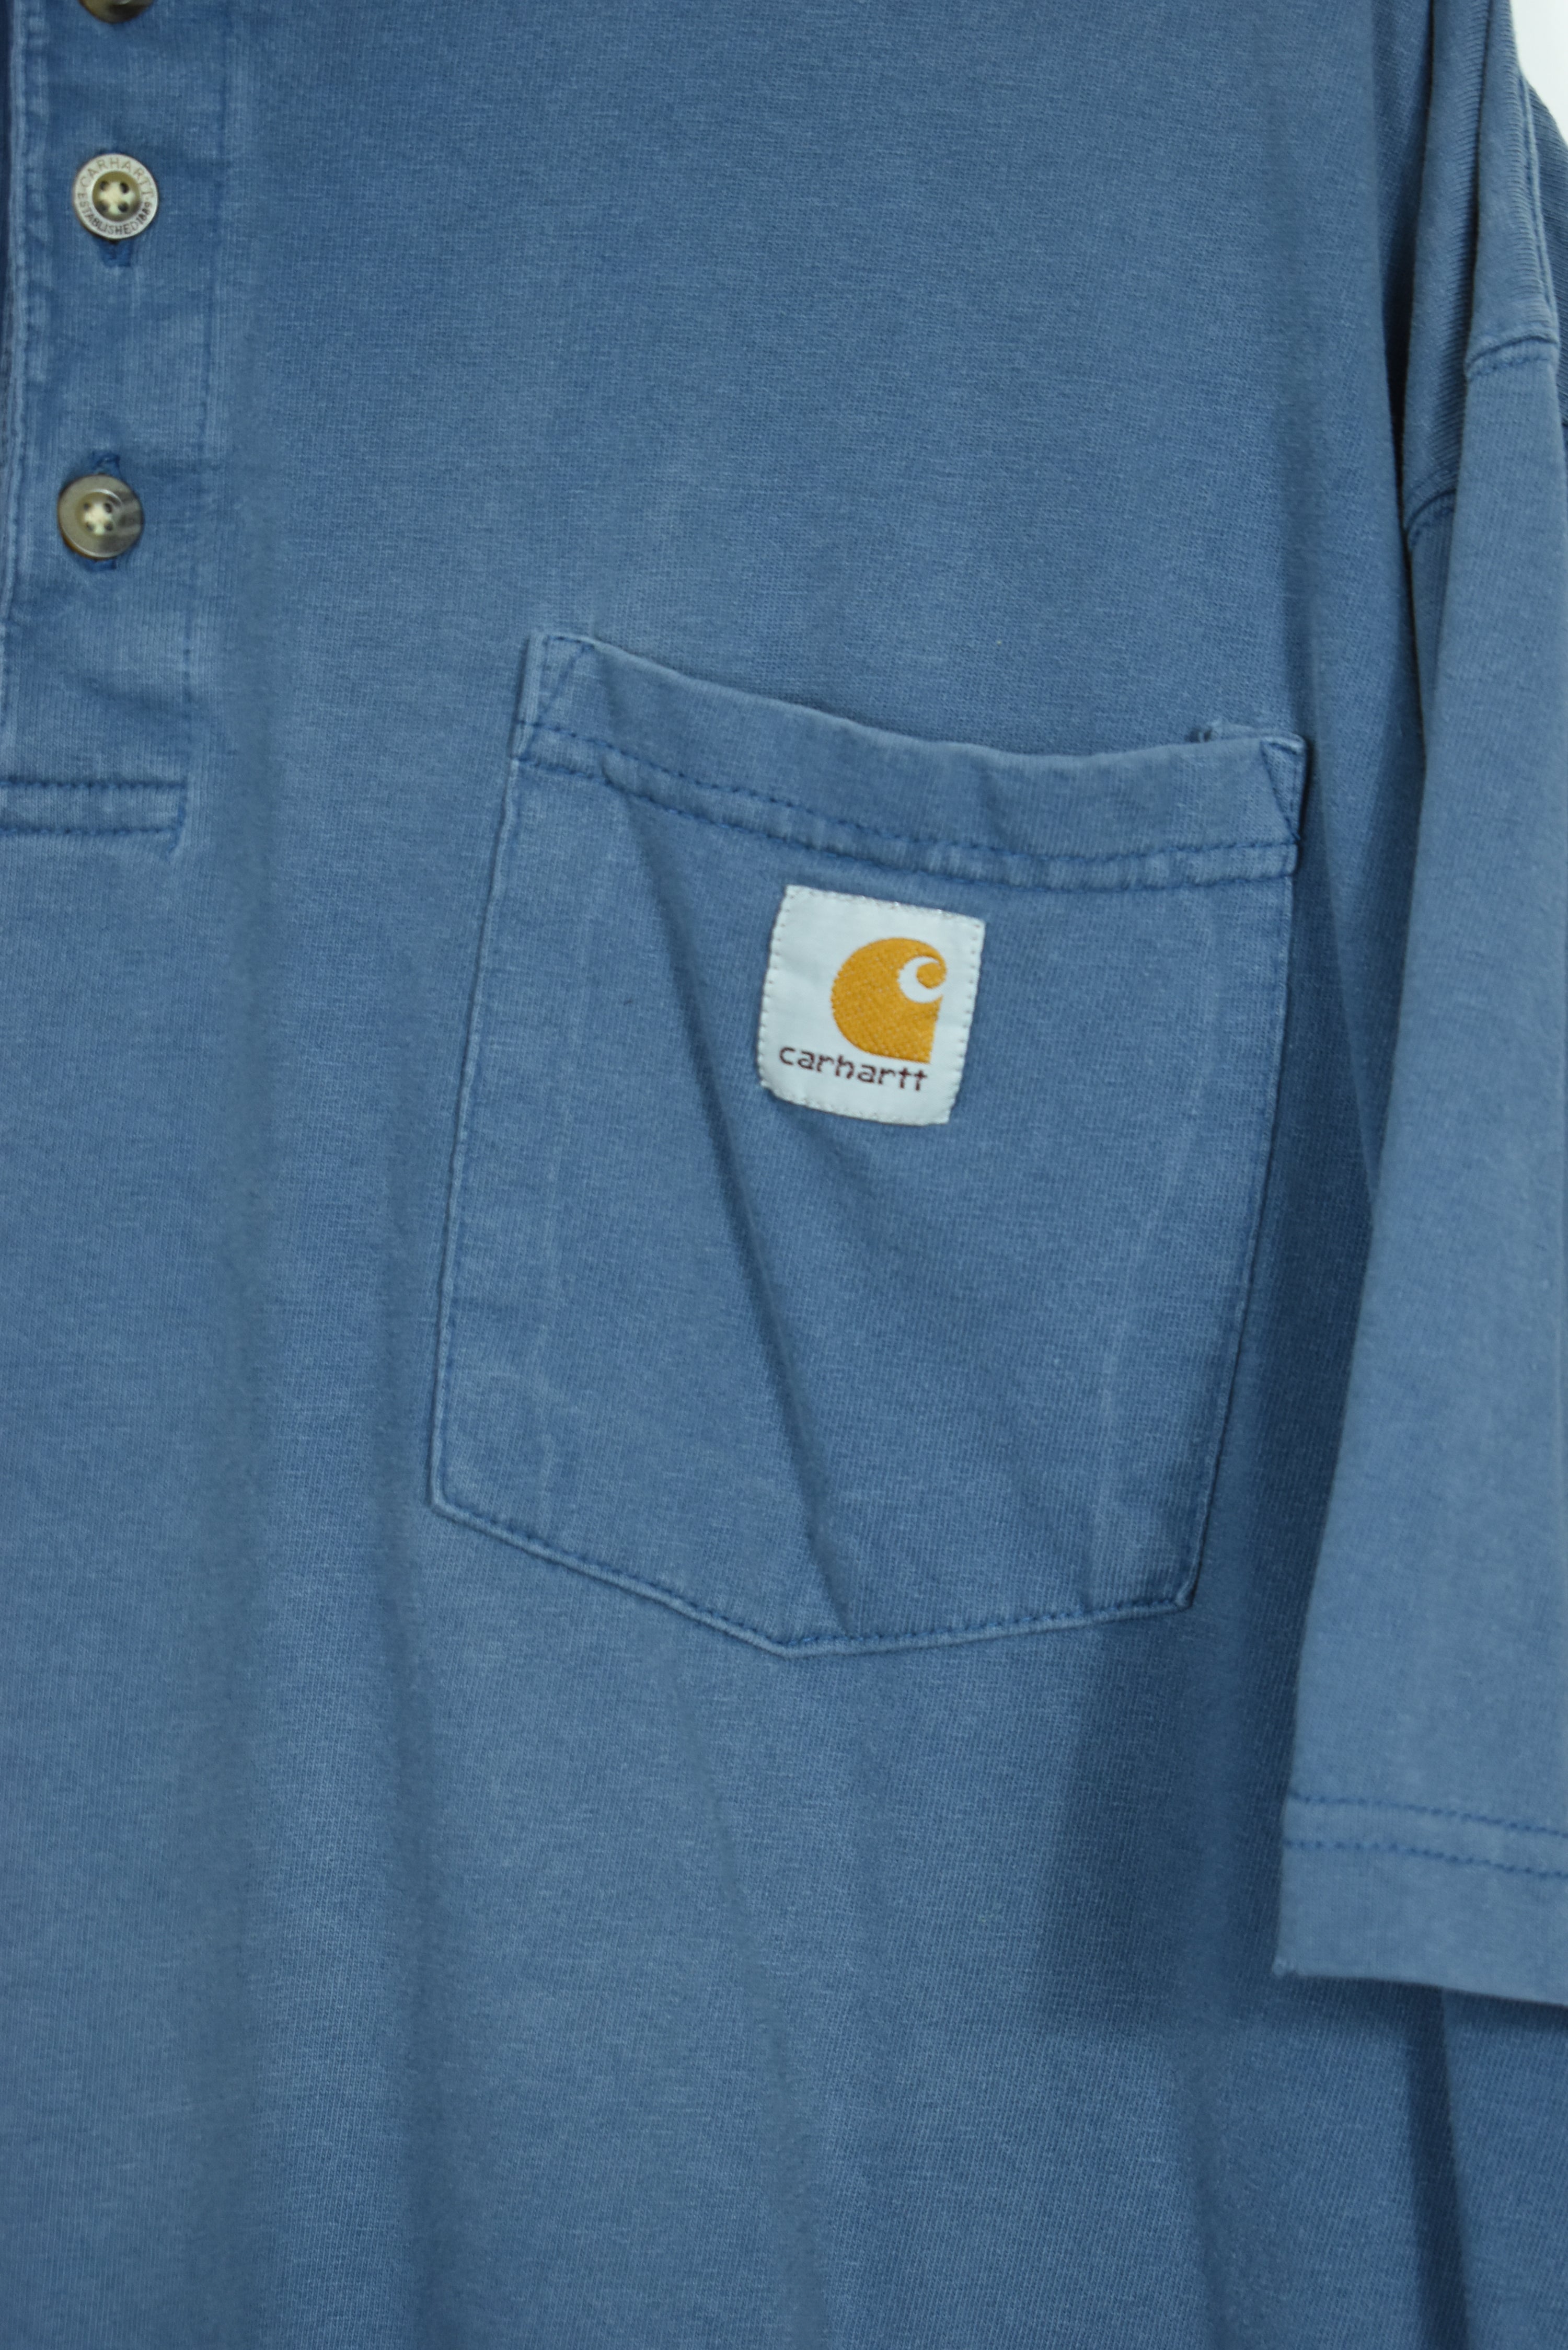 Vintage Carhartt Button Up T Shirt Xlarge